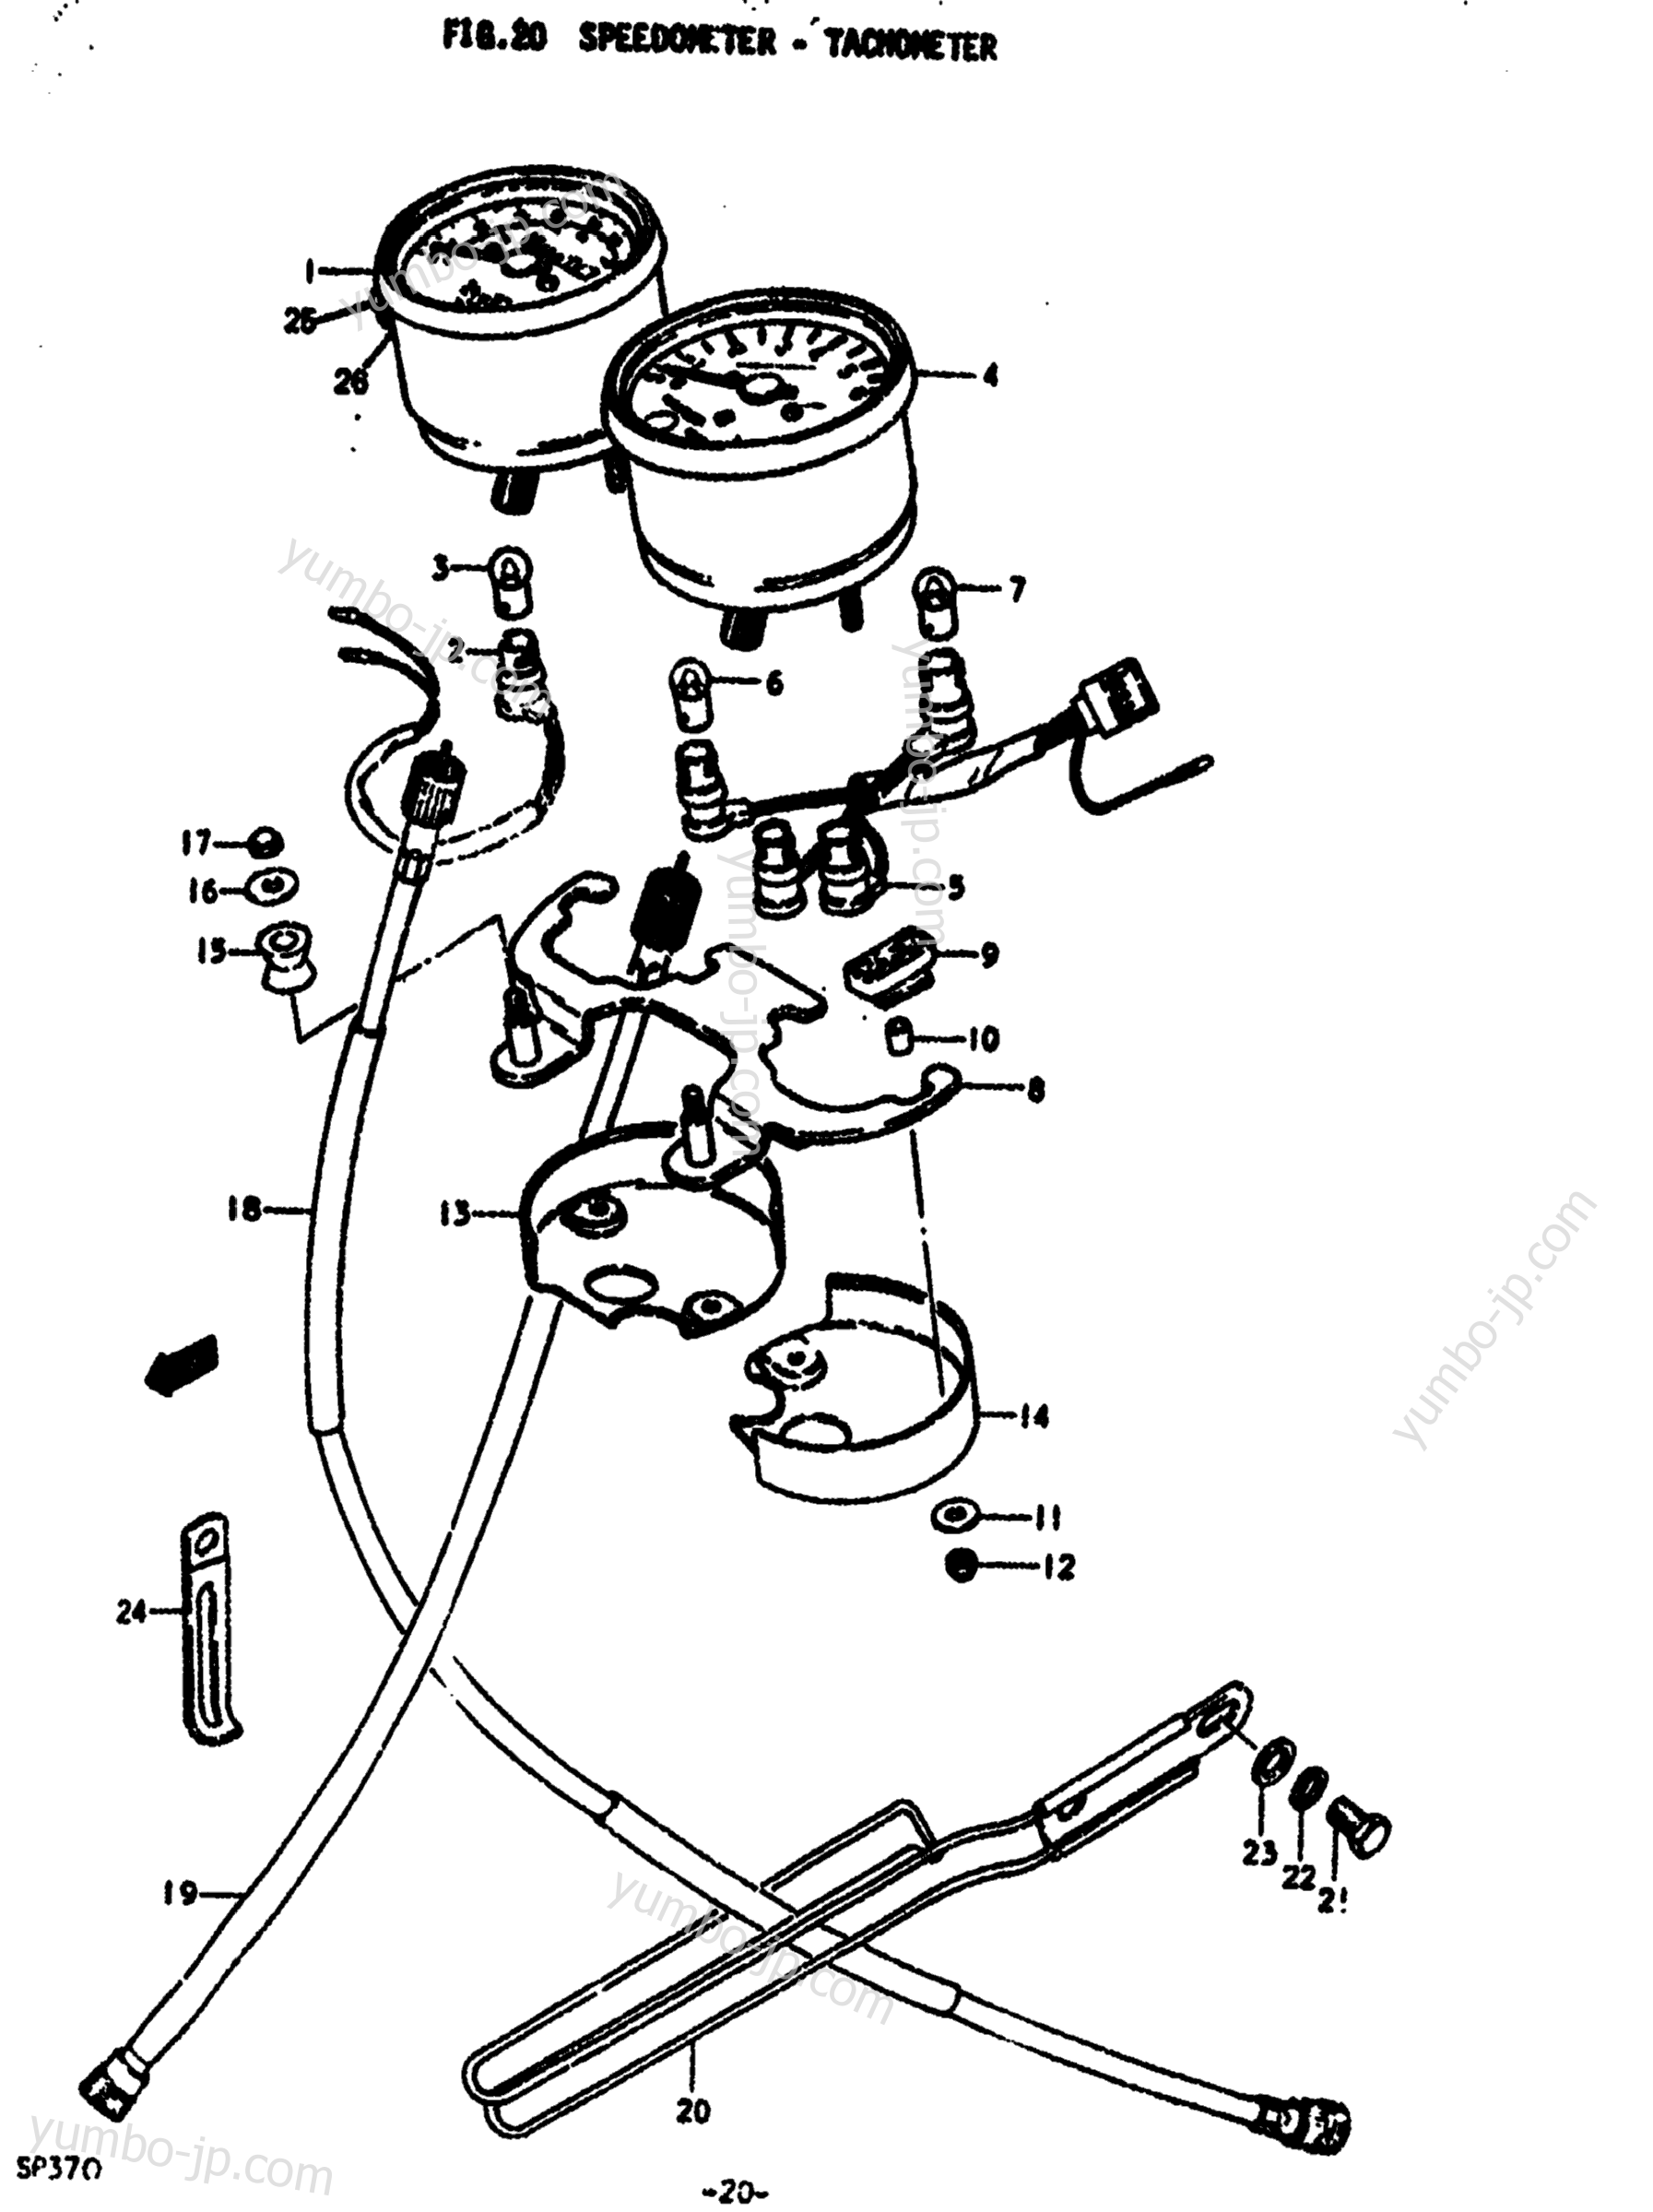 Speedometer - Tachometer for motorcycles SUZUKI SP370 1979 year